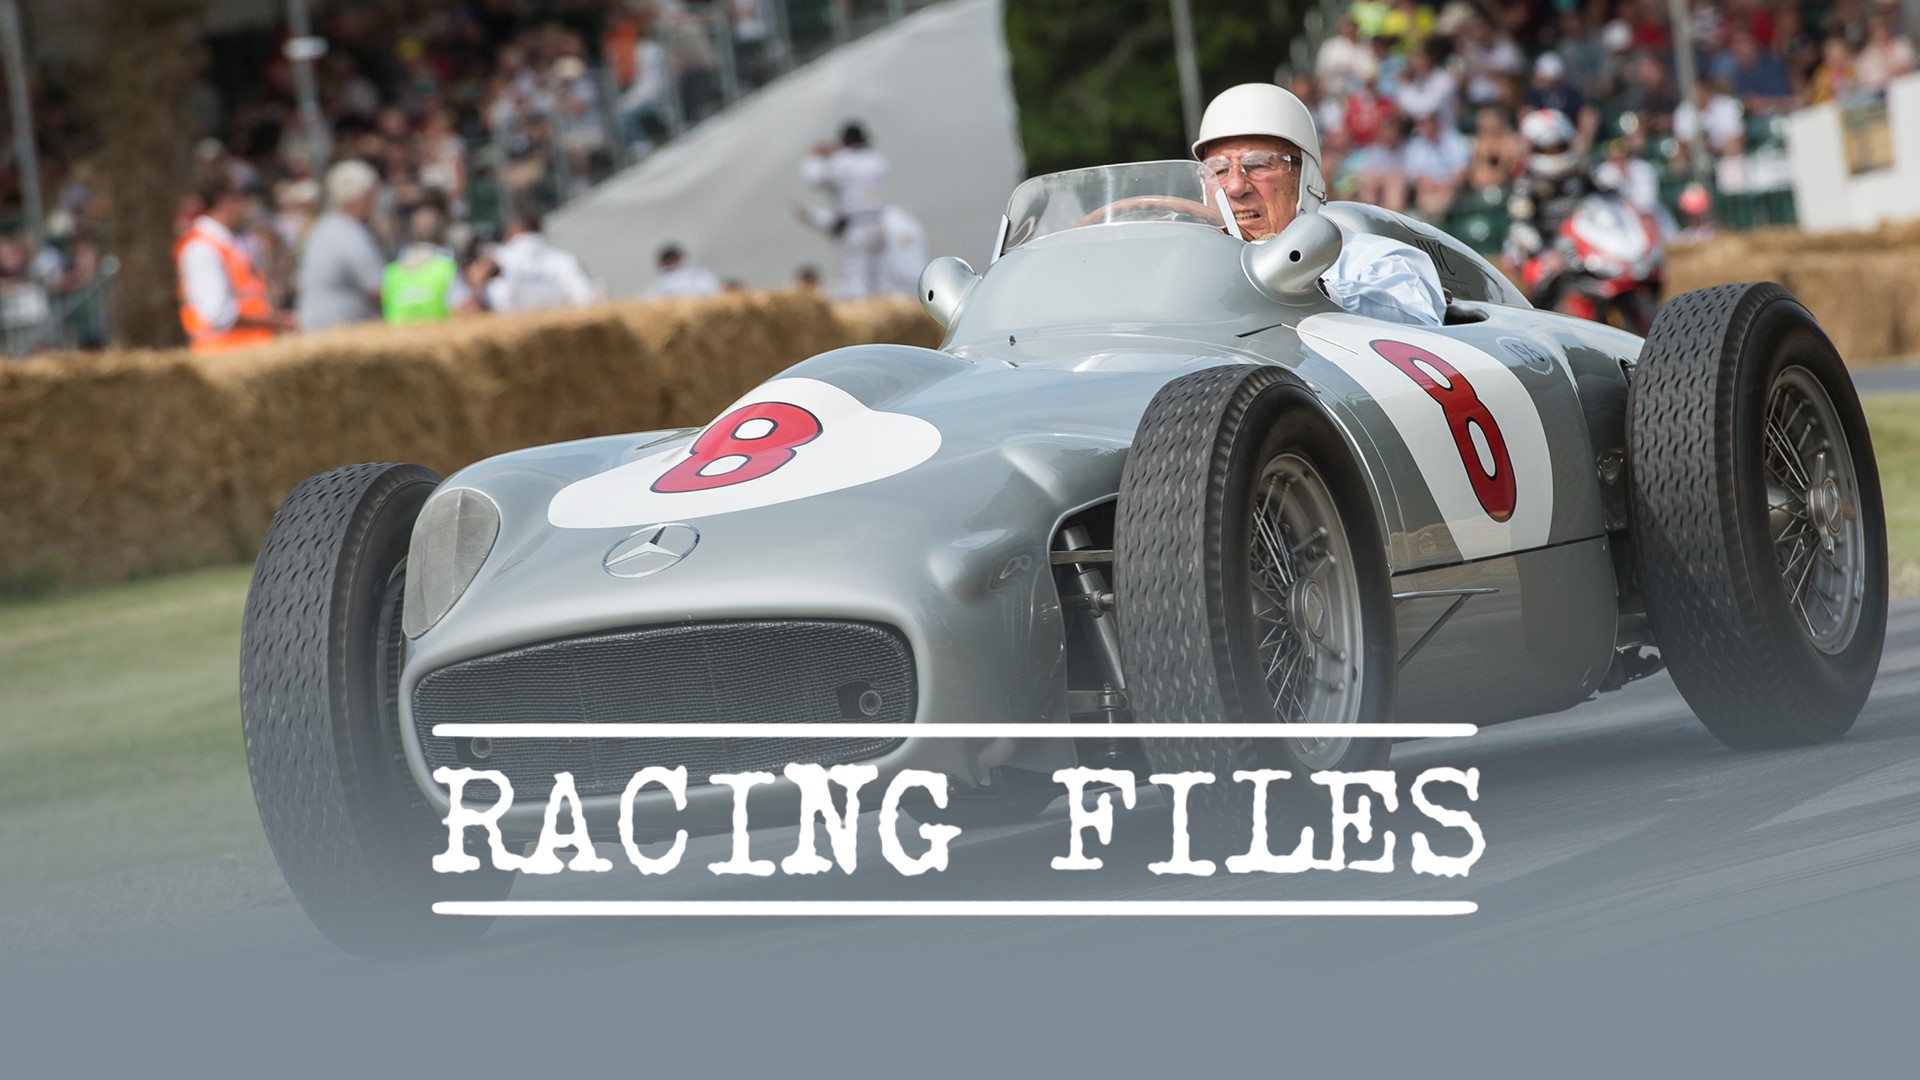 Racing Files